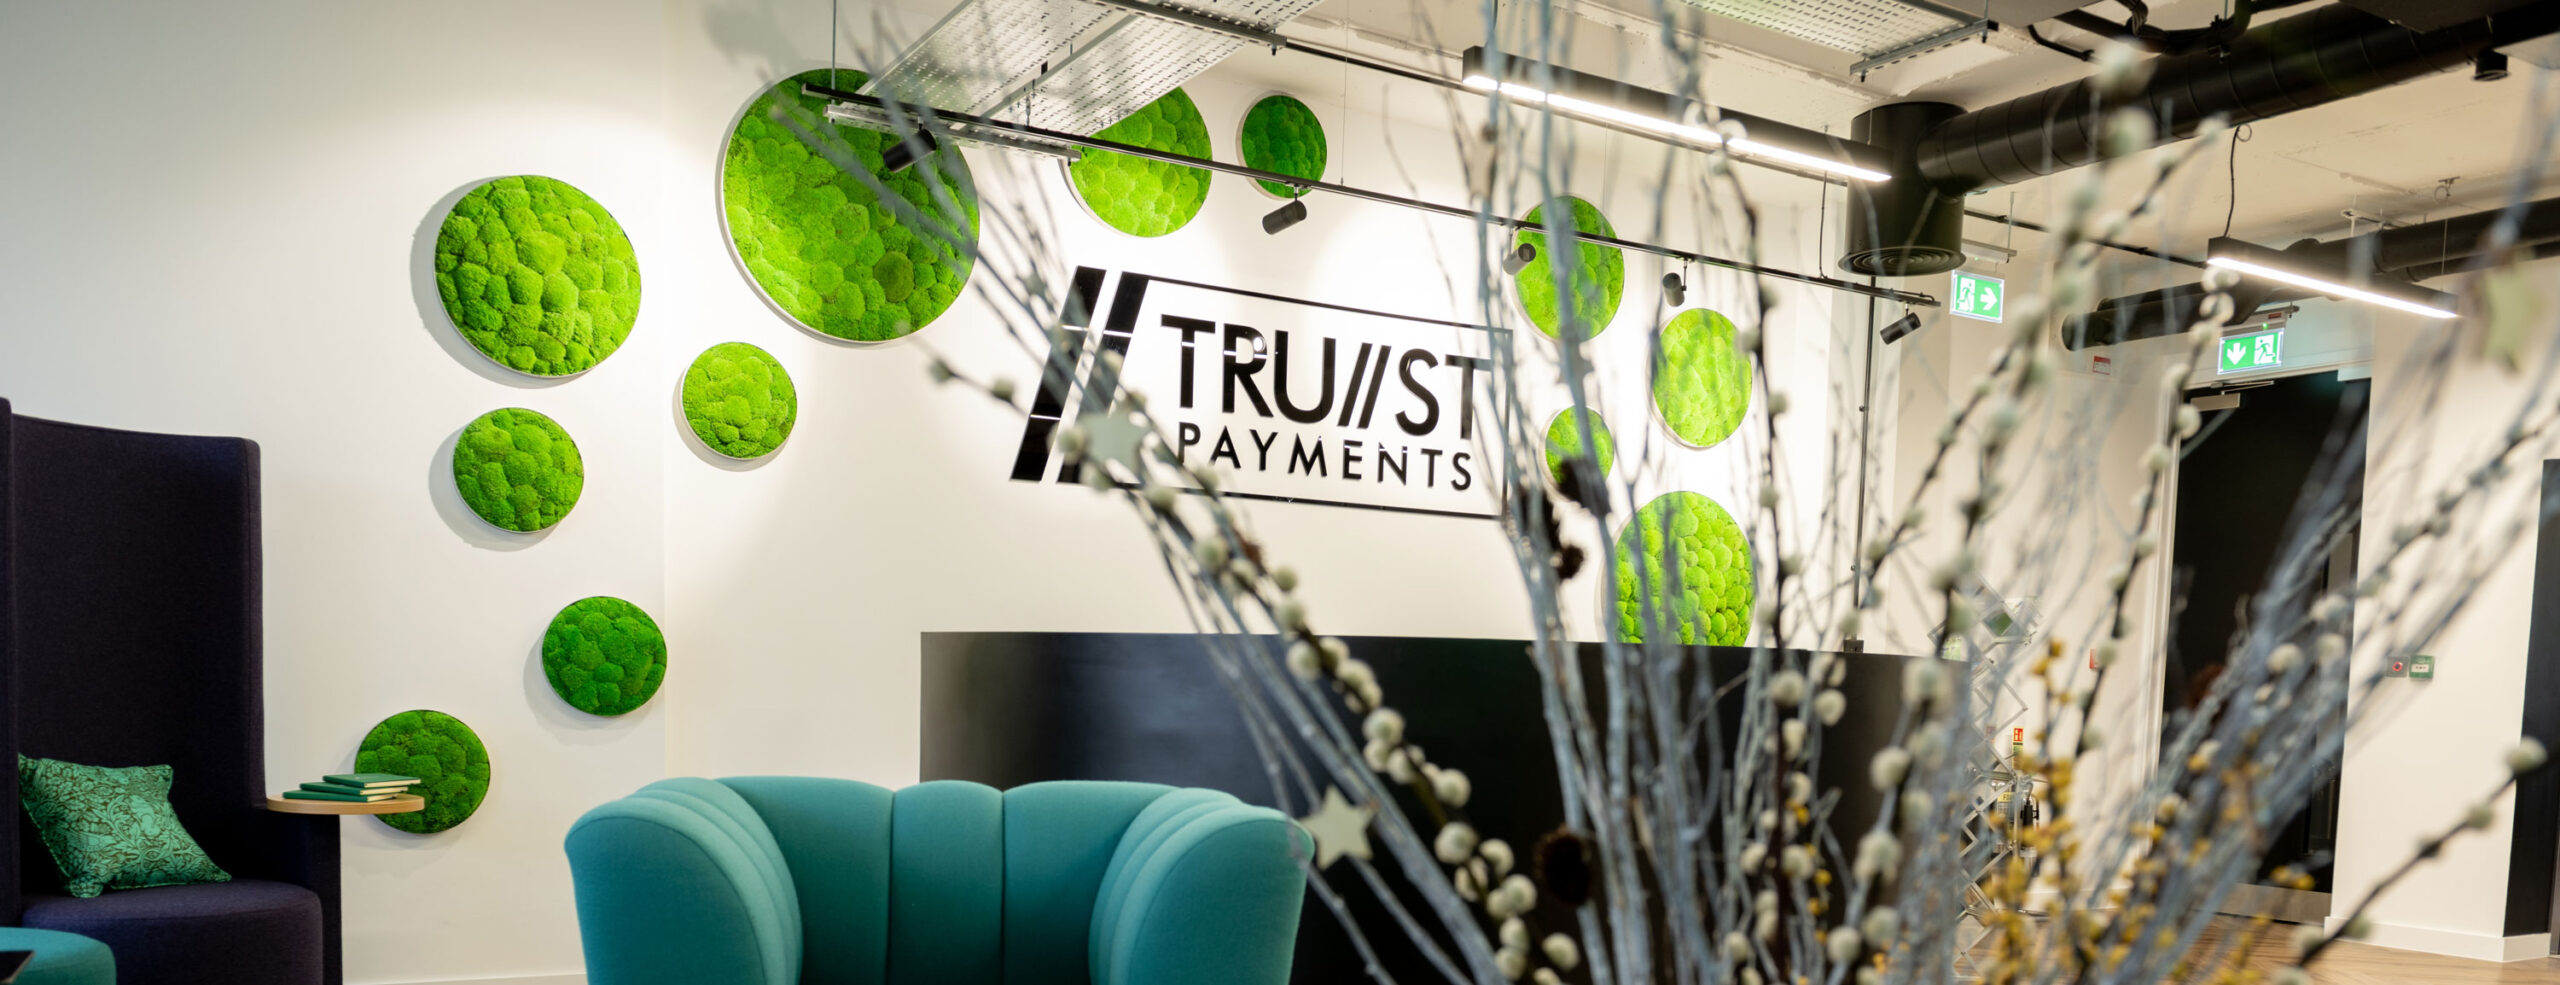 Trust Payments - Enaflo Interiors